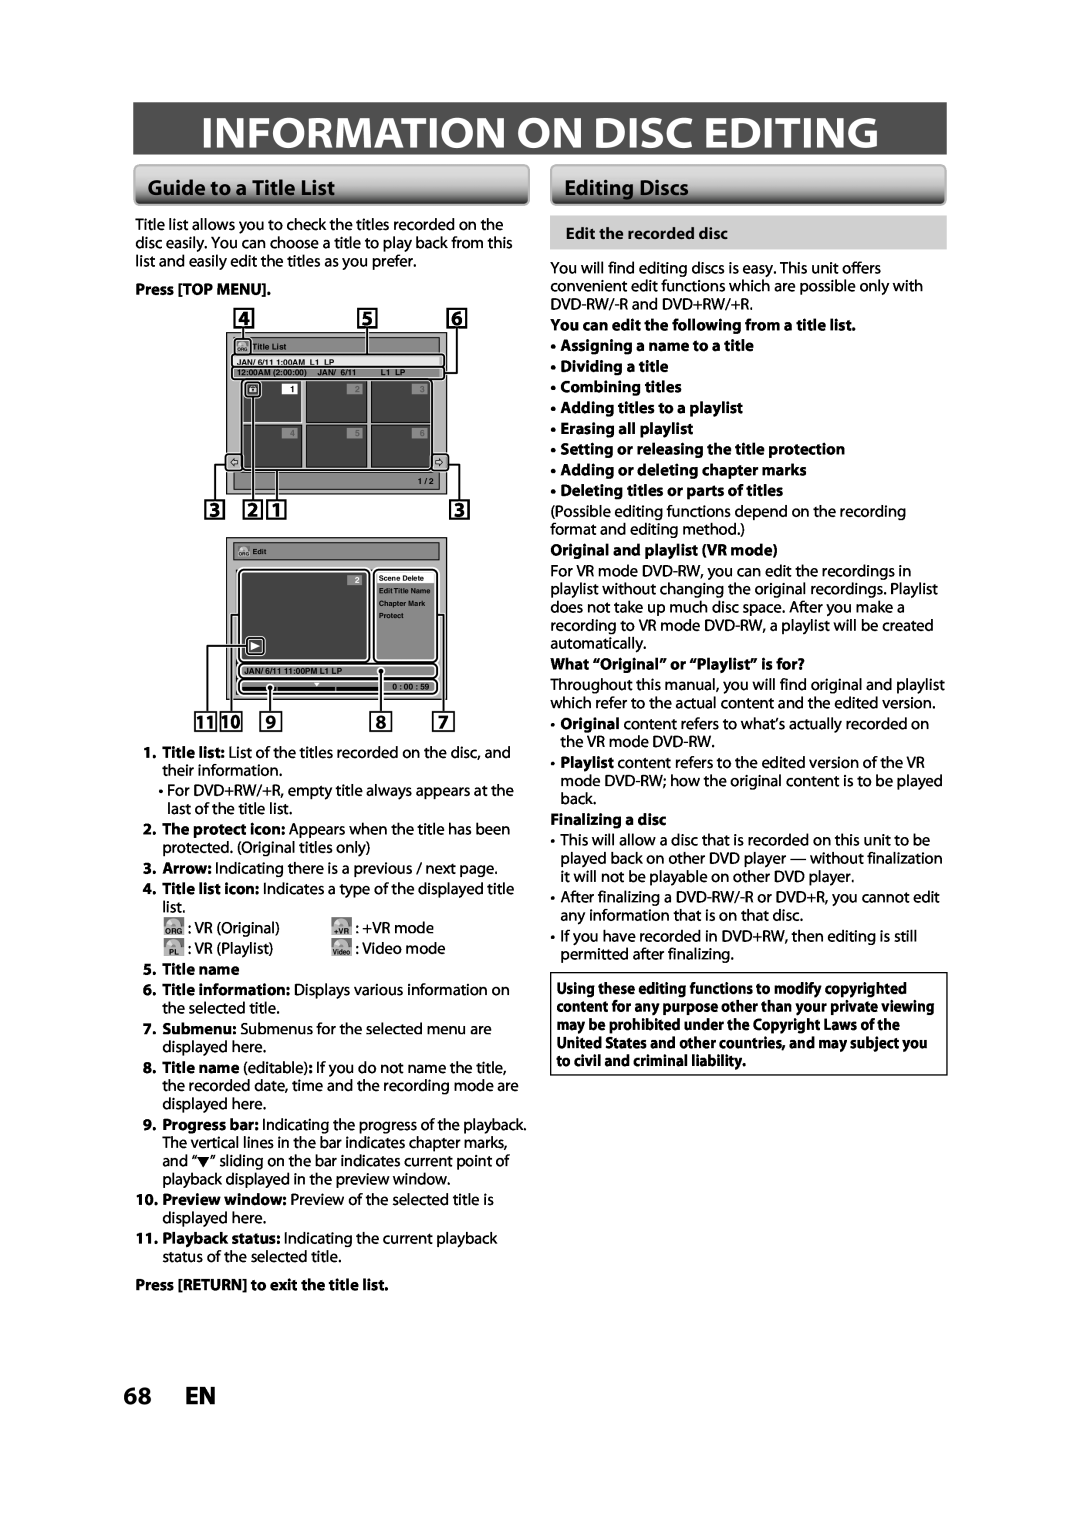 Toshiba DVR620KC Information On Disc Editing, 68 EN, Guide to a Title List, Editing Discs, Press TOP MENU, VR Original 